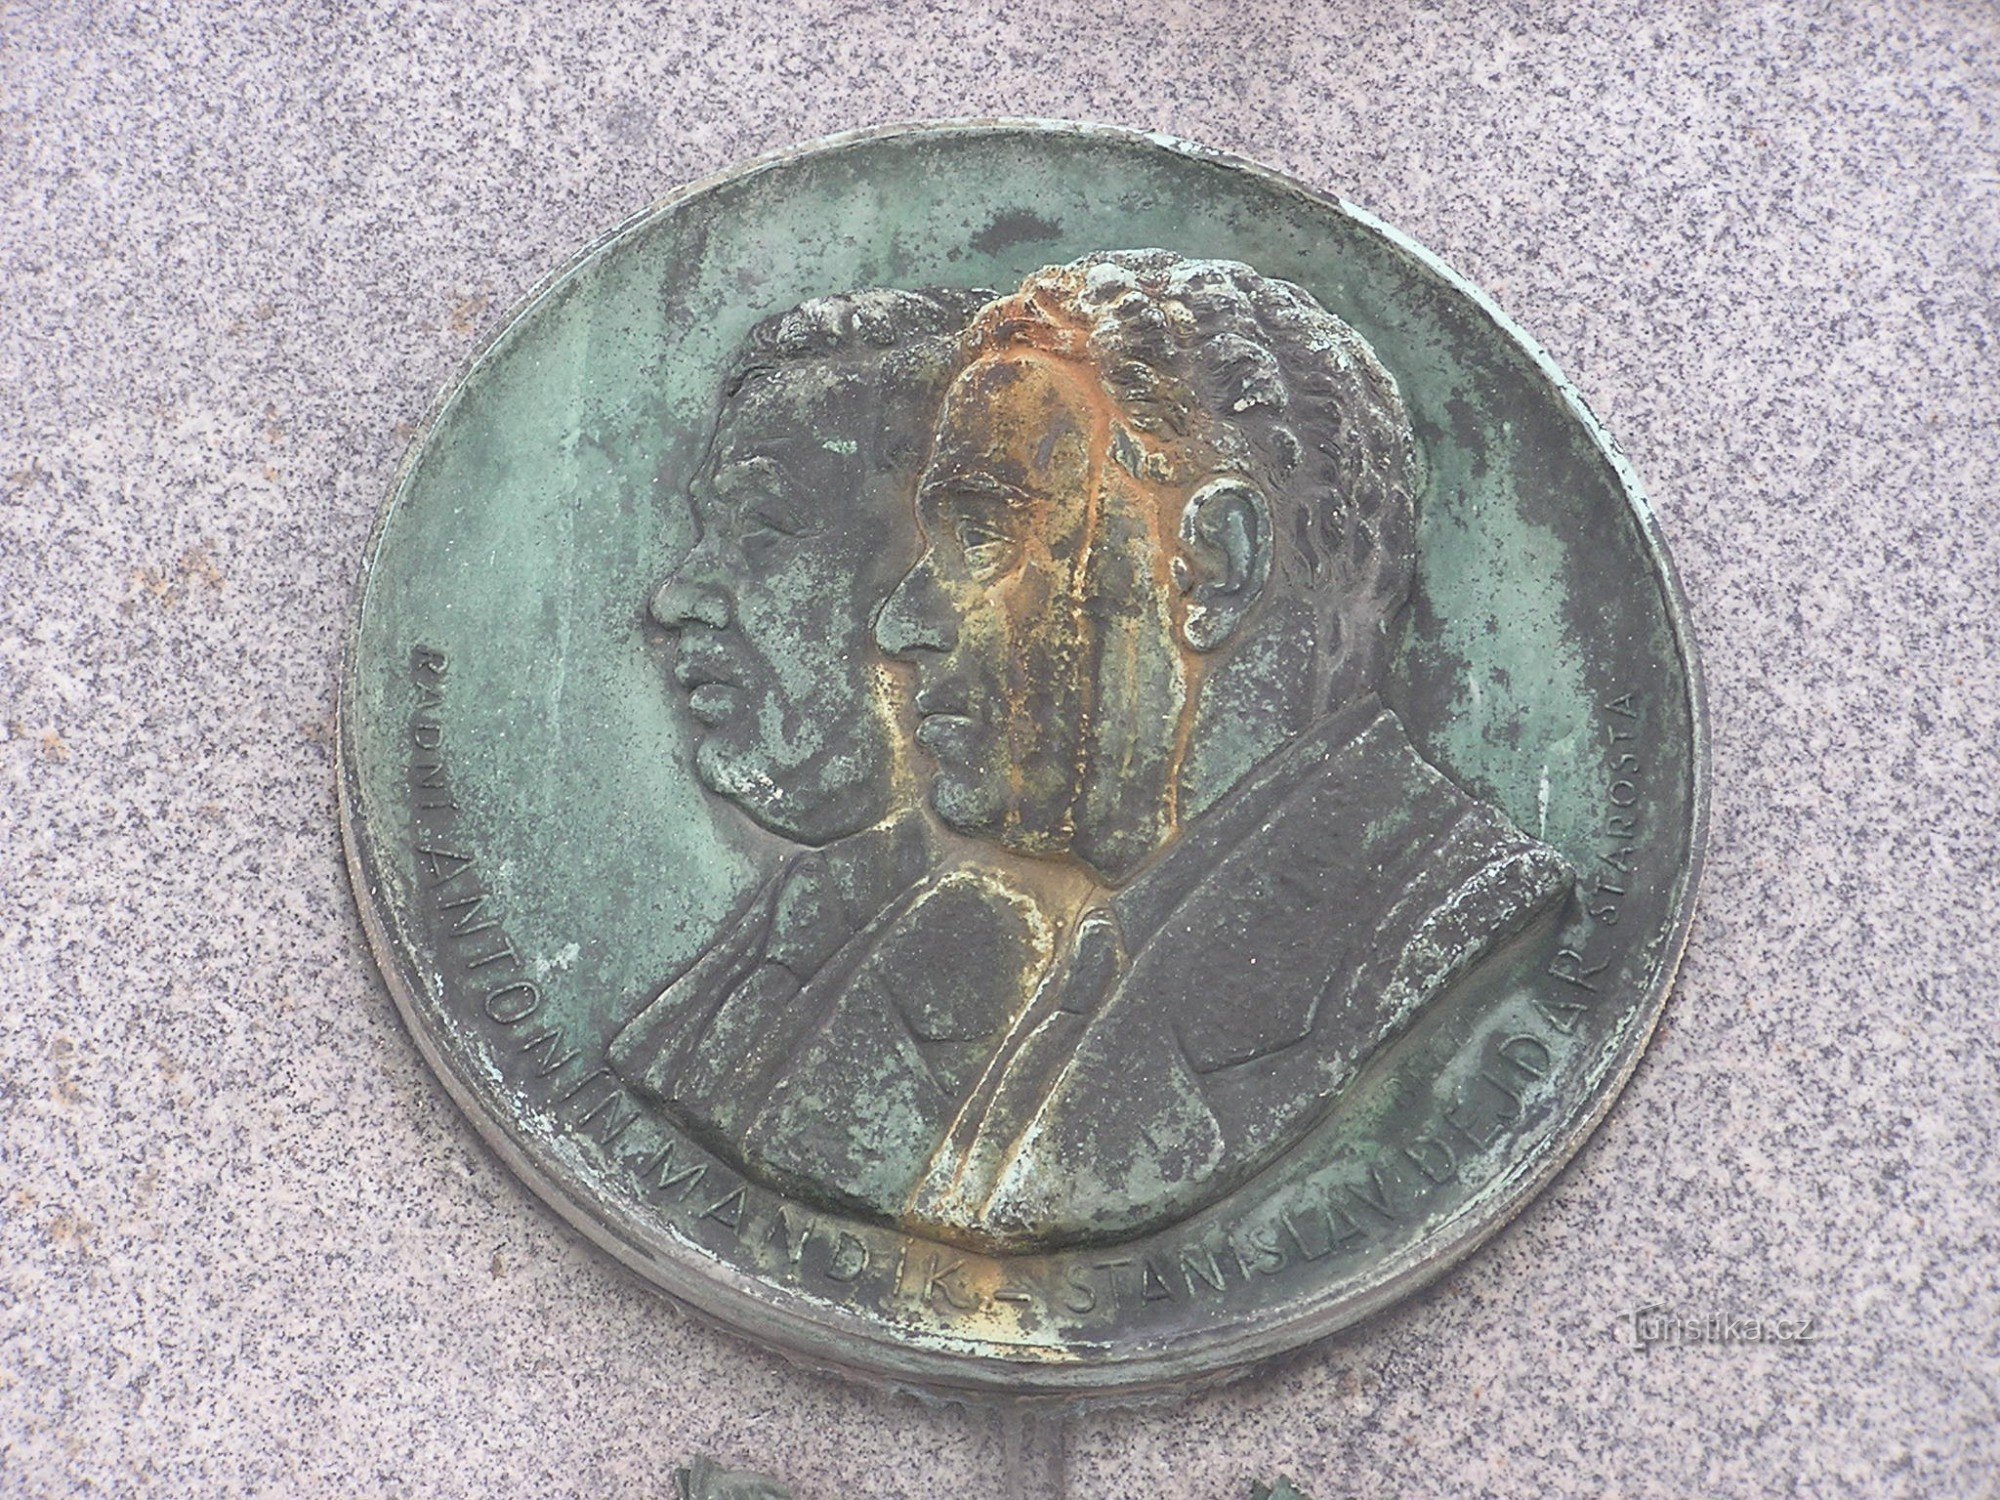 Chrast - memorial plaque of Stanislav Dejdar and Antonín Mandík